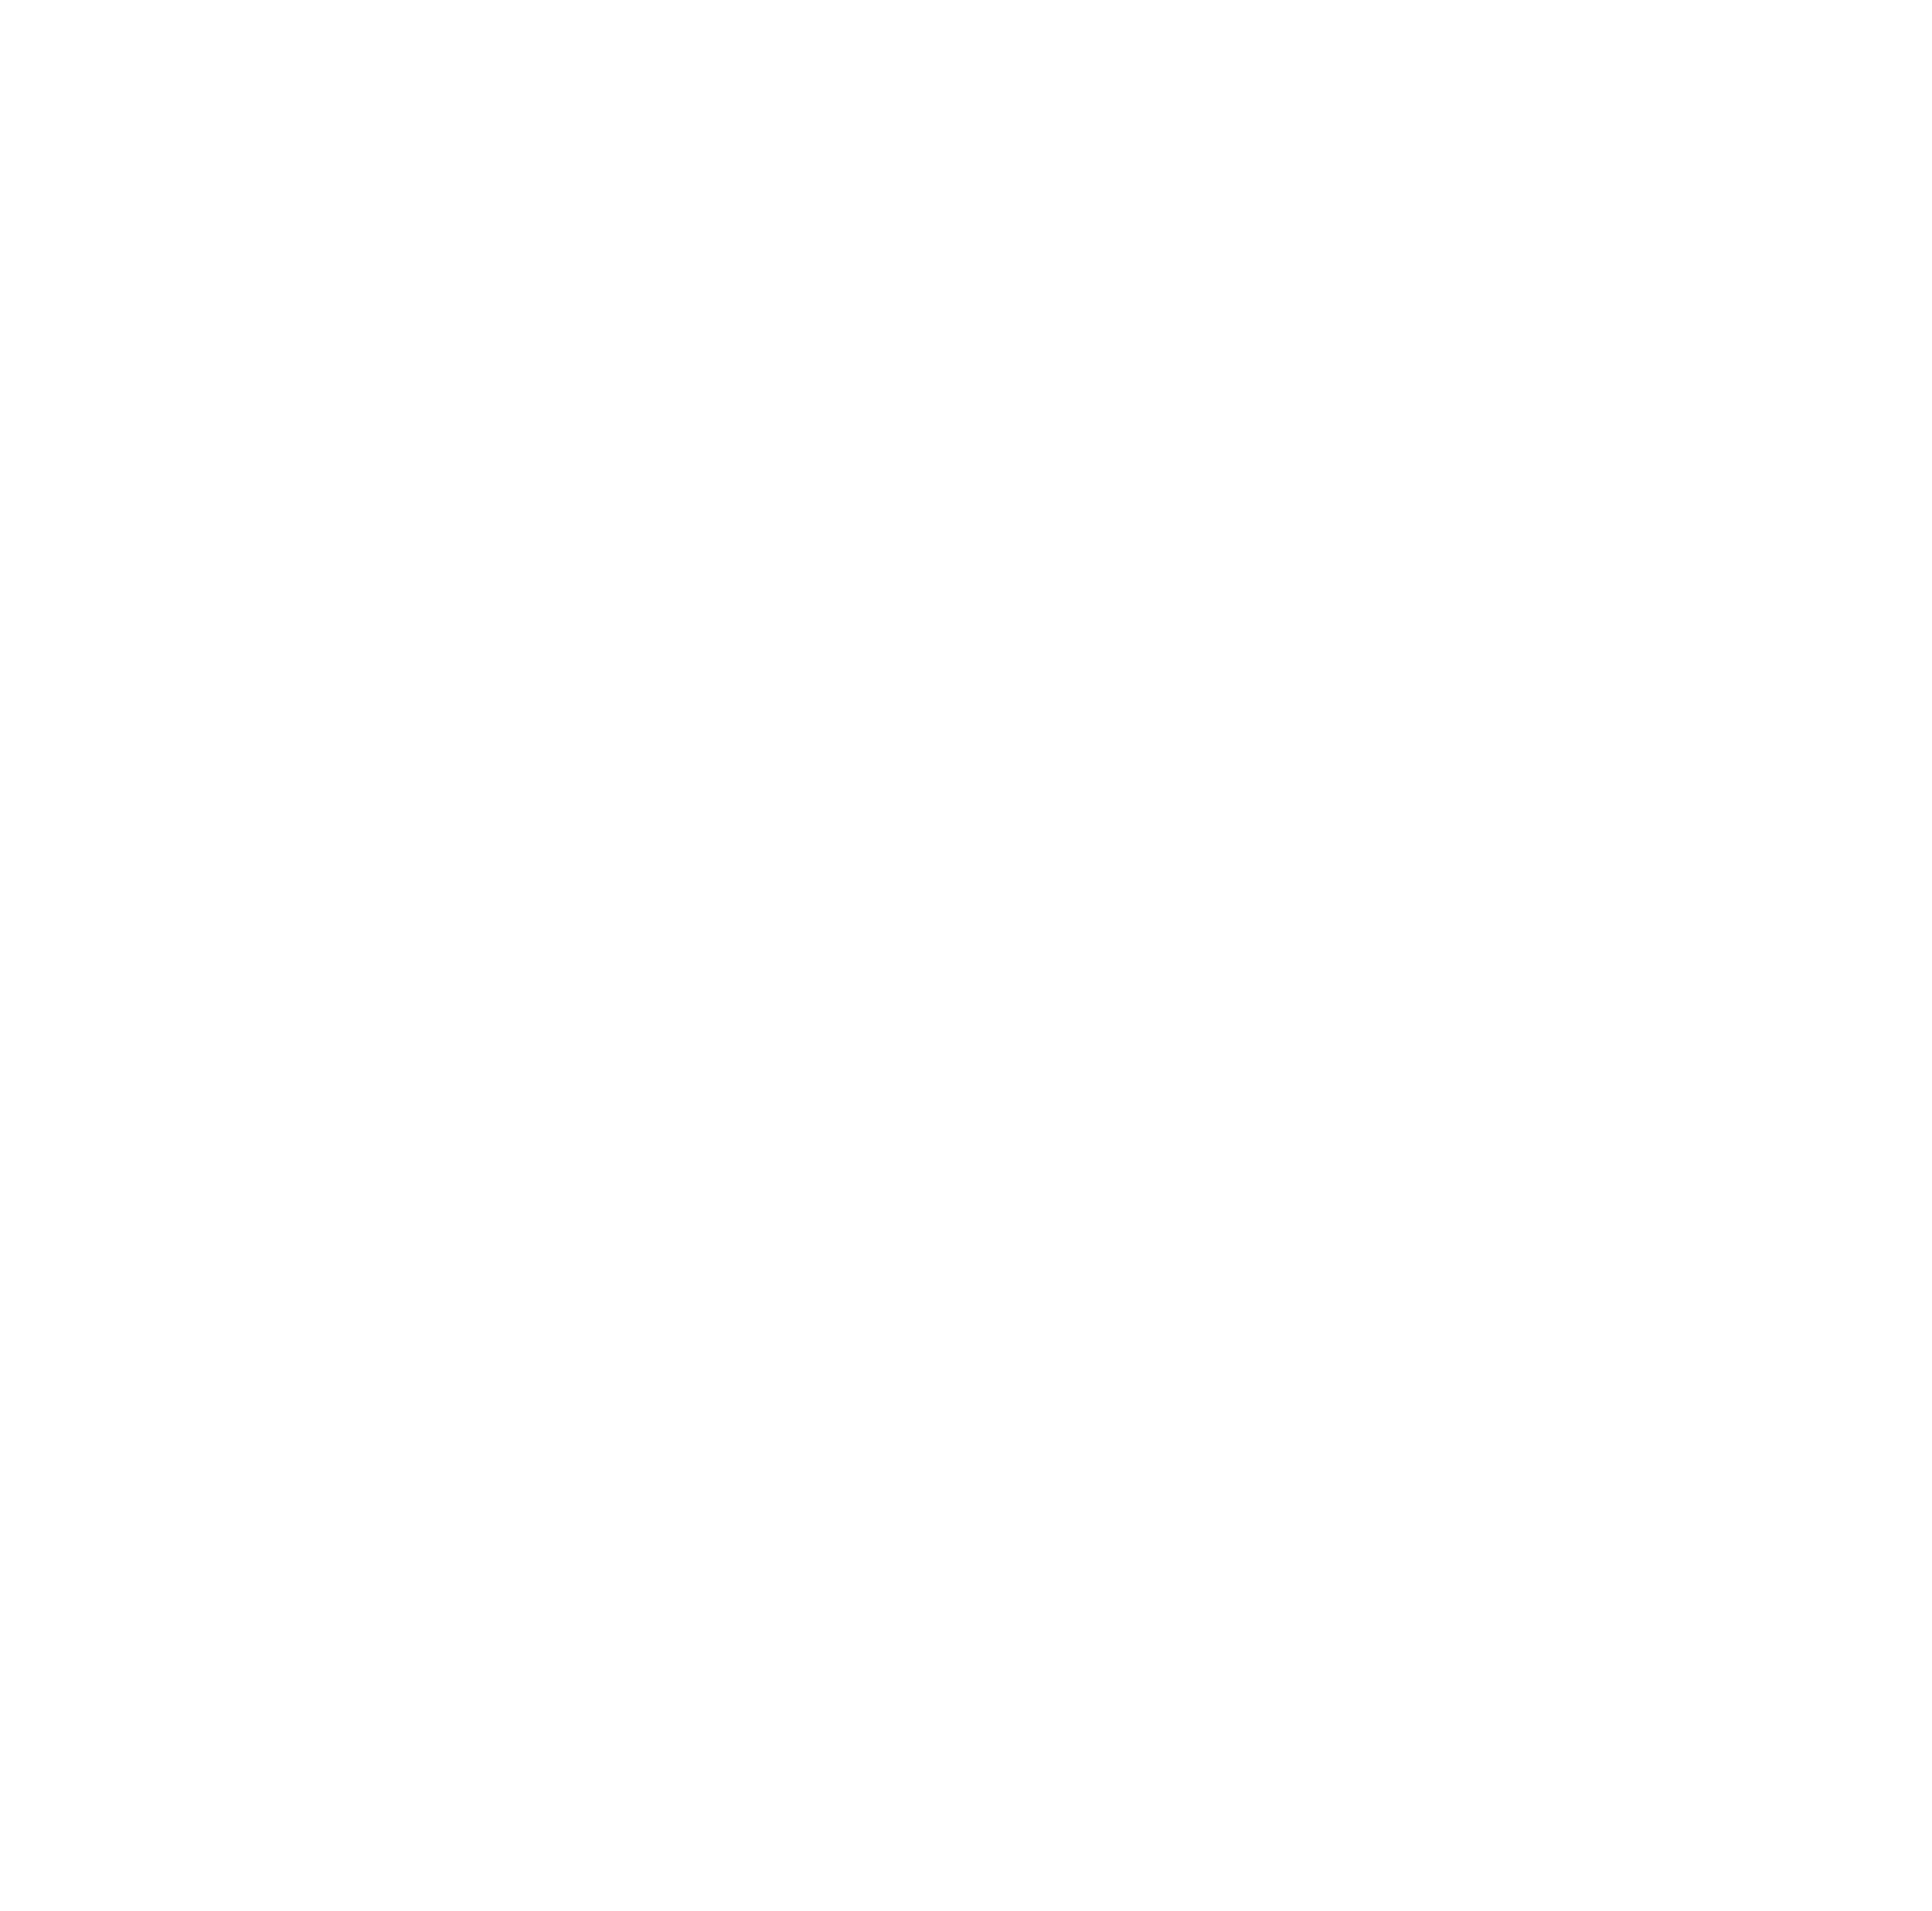 robotic brain icon